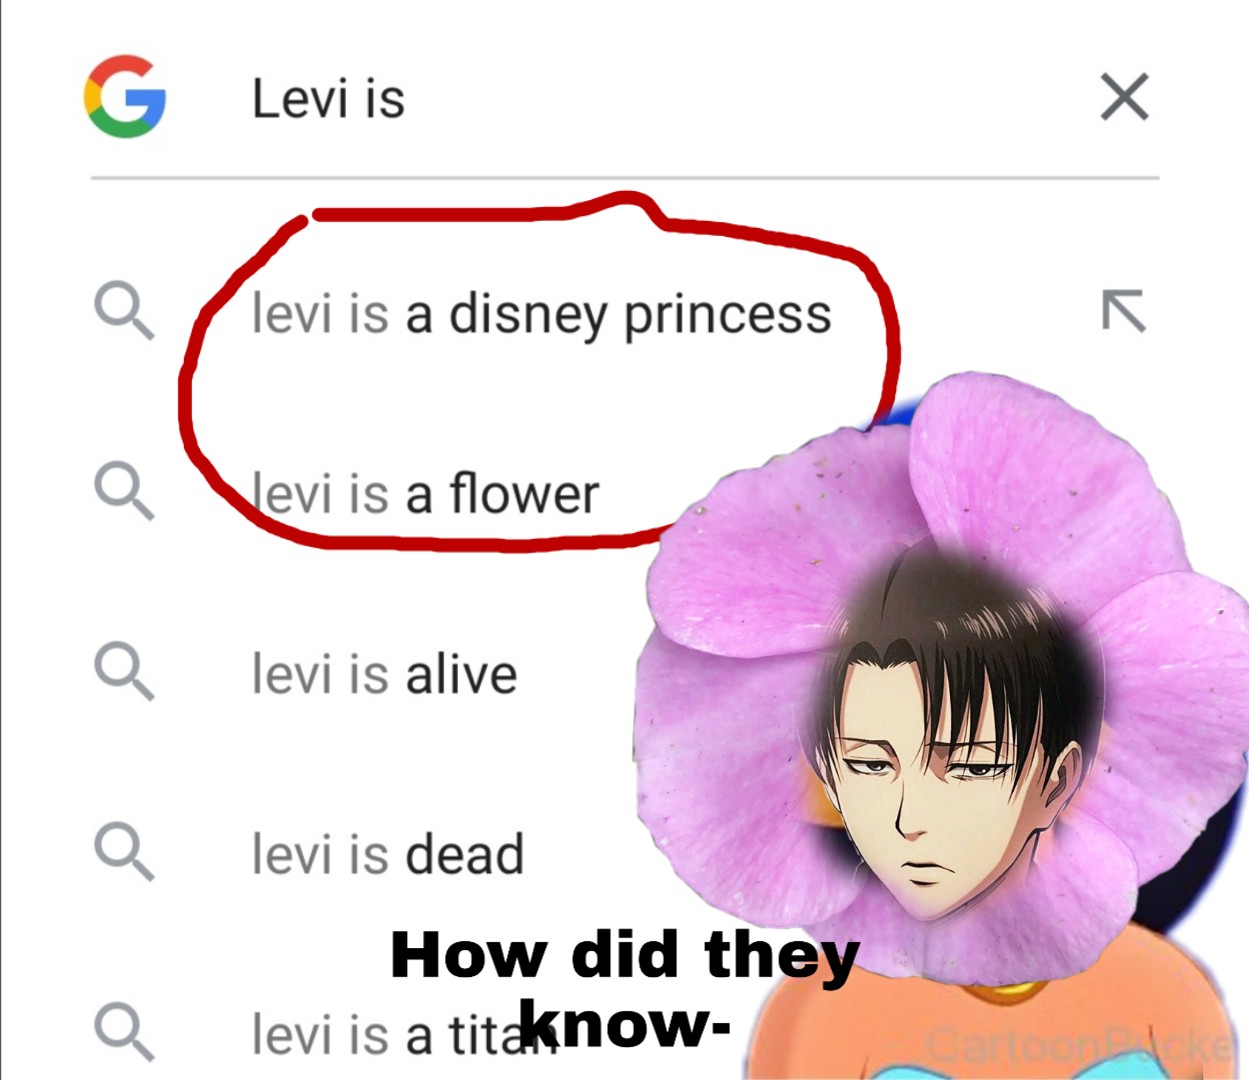 Levi is a princess